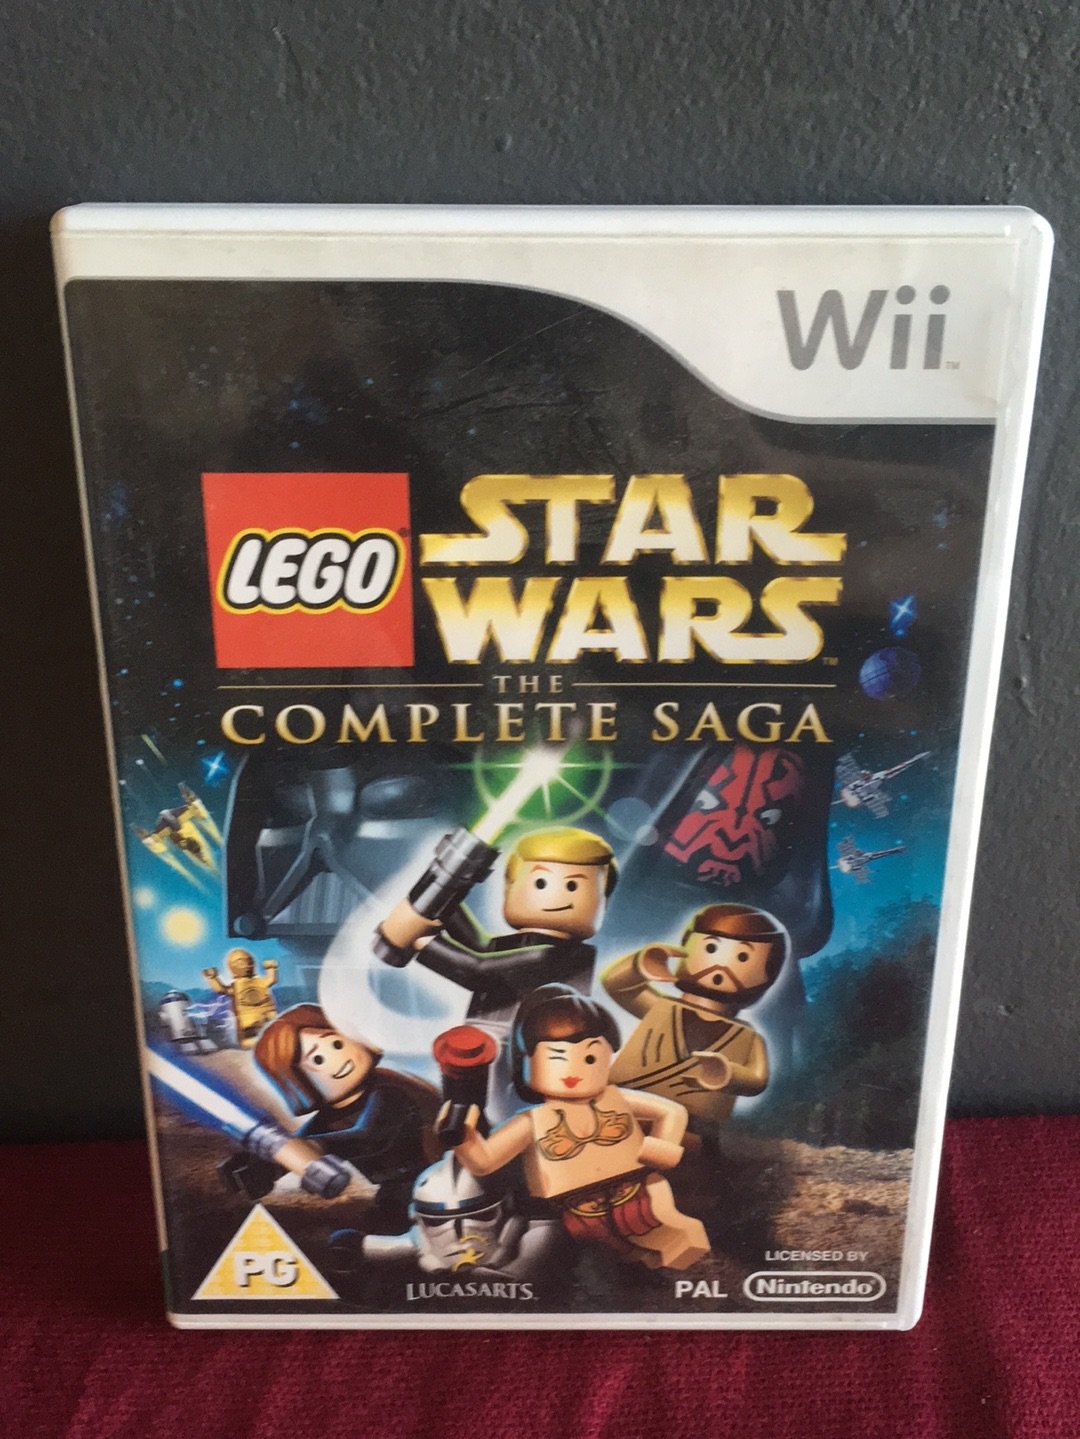 Star Wars Lego Wii Game